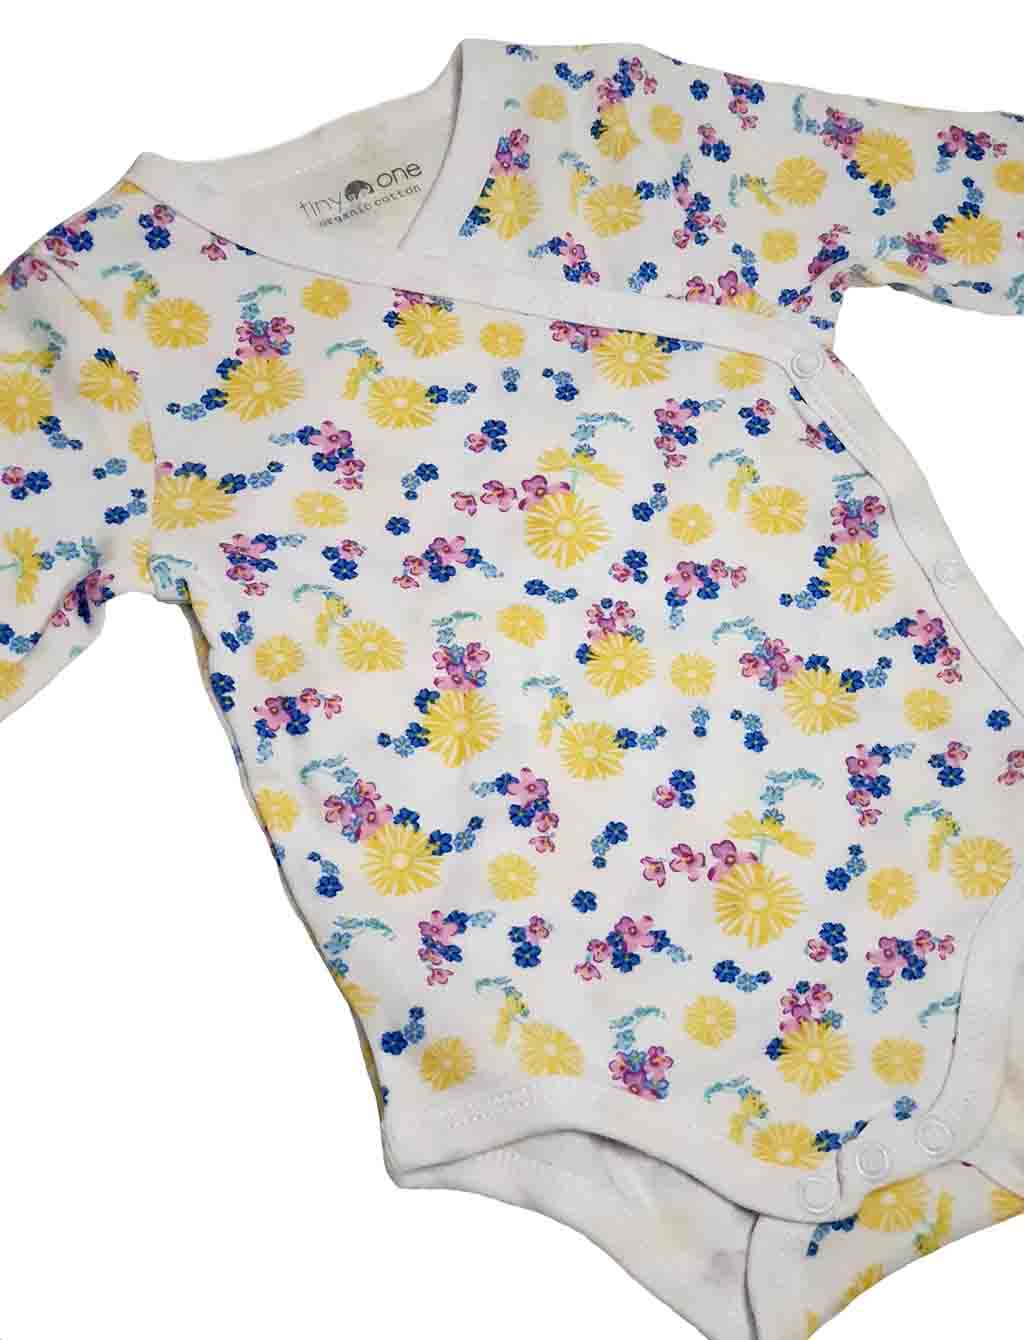 Wit-White-Rompertjes-Rompers-Organic-cotton-Longsleeves-Lange-mouwen-Flowers-Bloemetjes-Biologisch-katoen-Babykleding-Baby-clothes